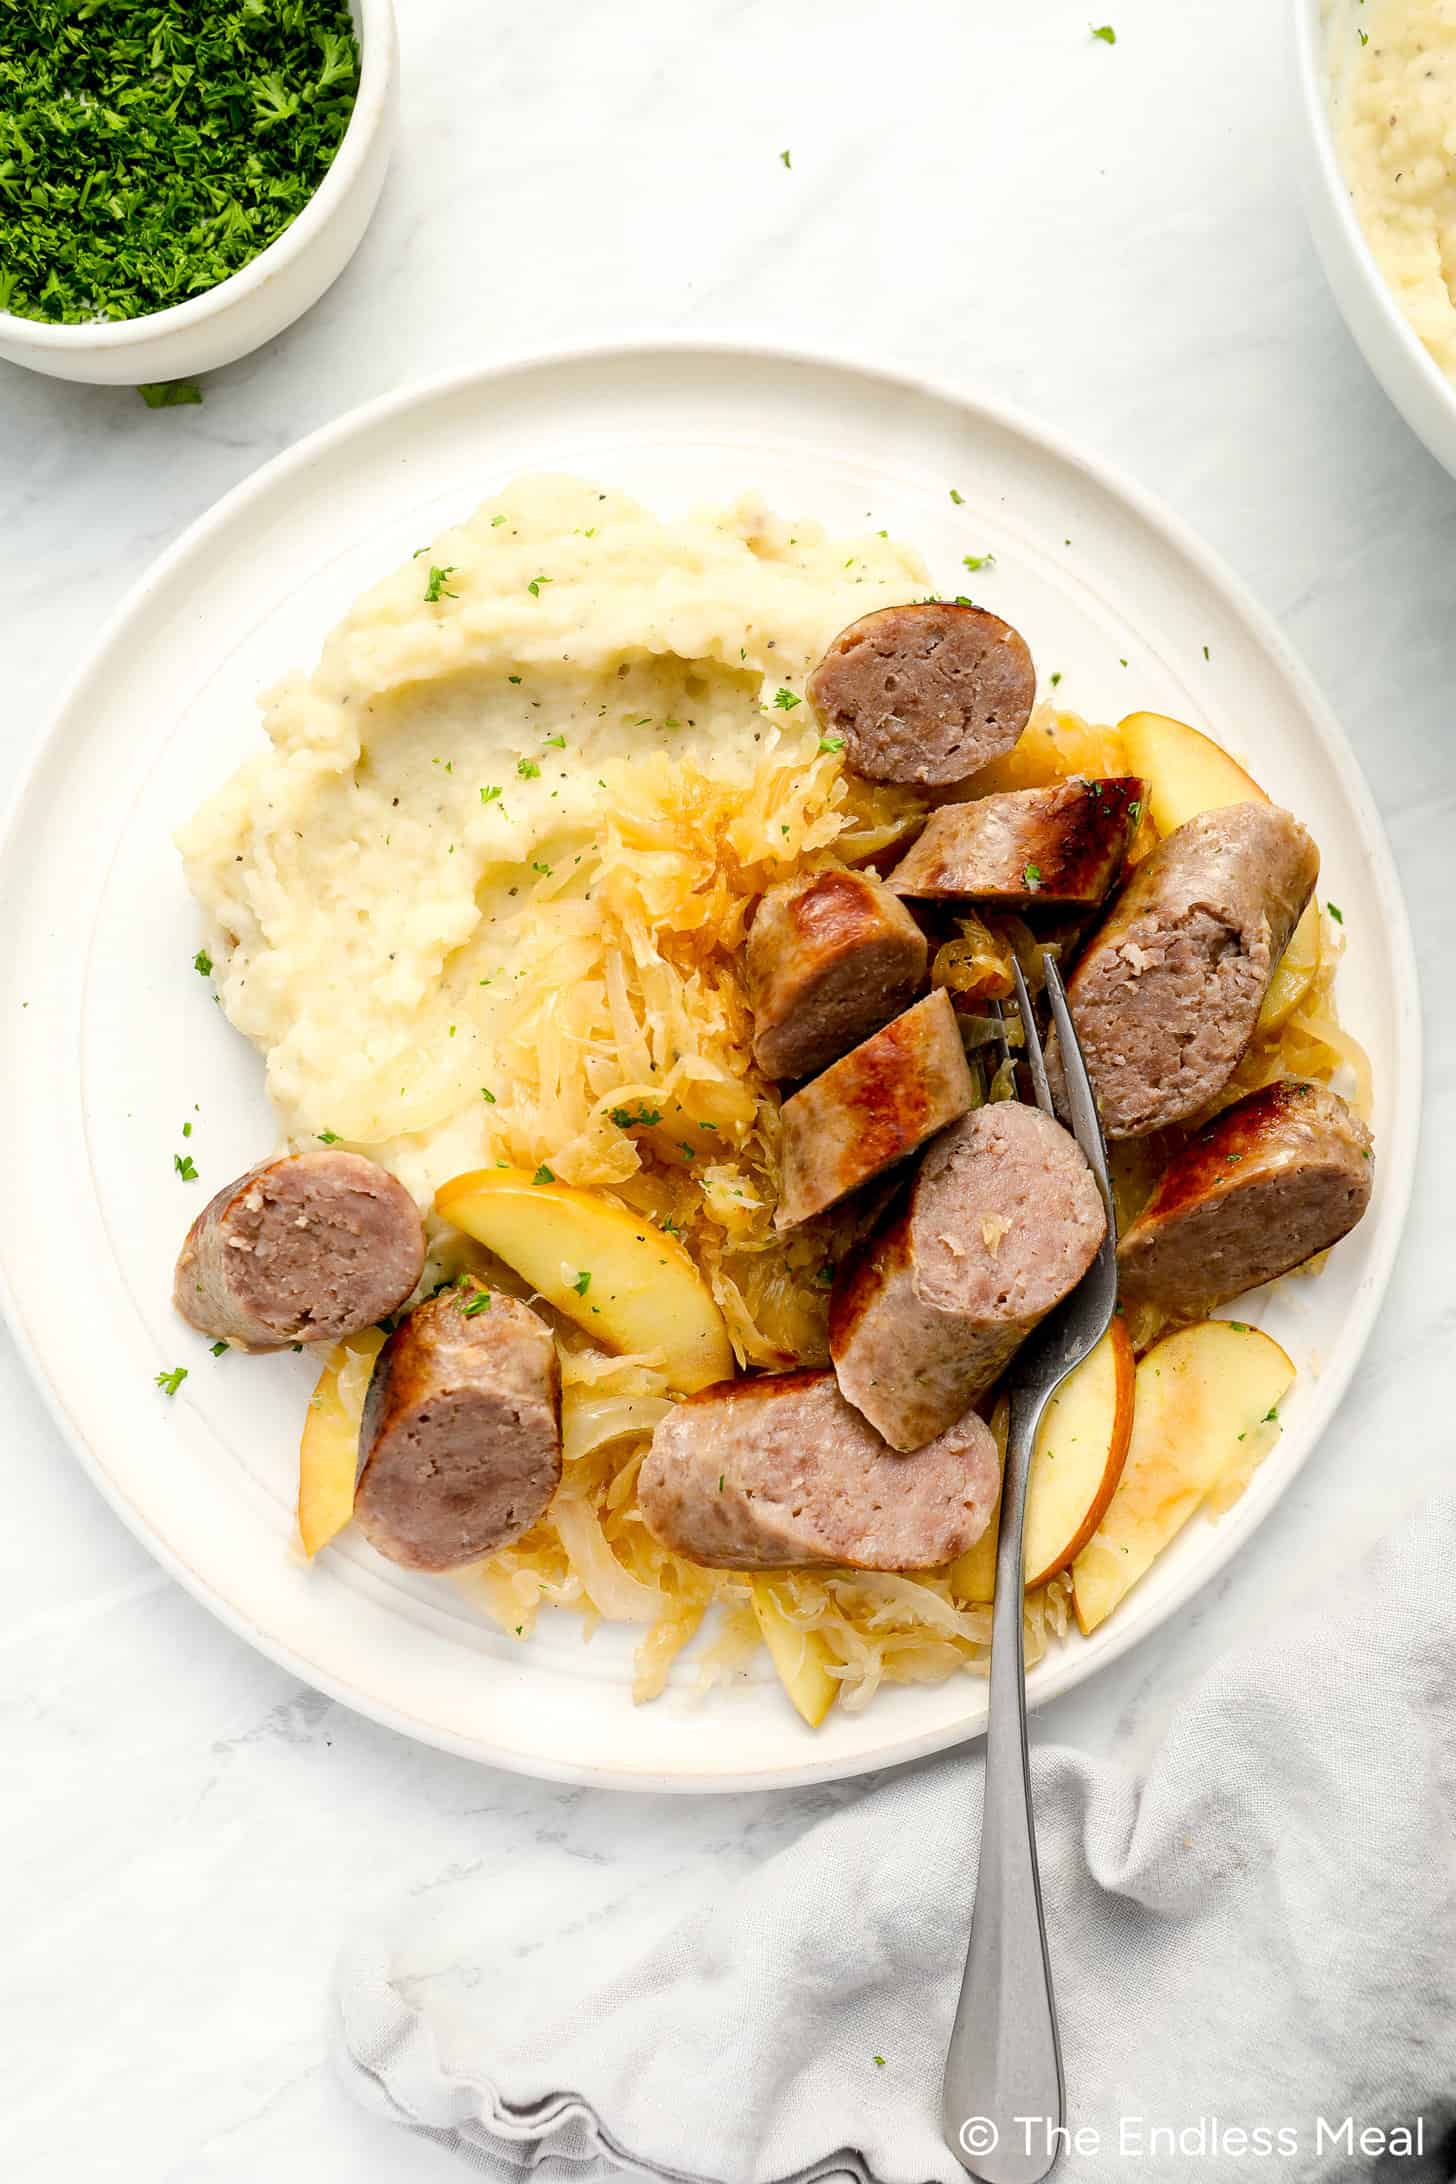 Bratwurst and Sauerkraut on a dinner plate